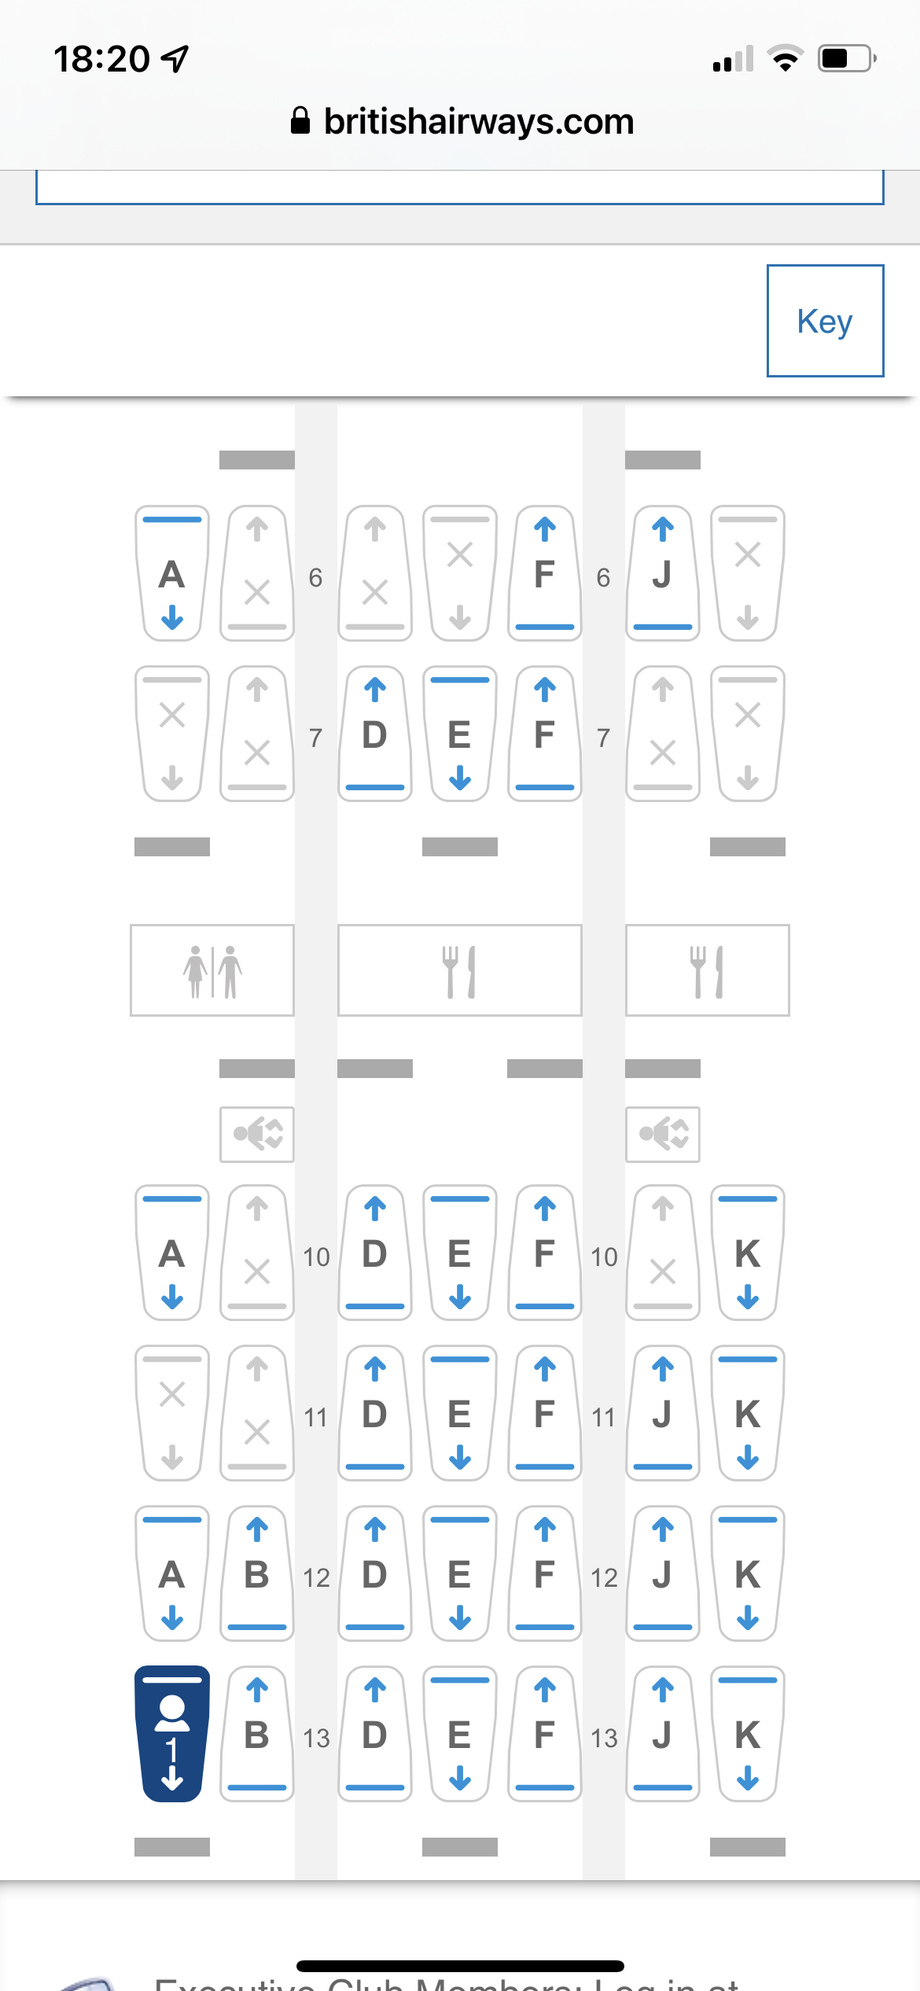 Seating guide: Boeing 787 Dreamliner - Page 78 - FlyerTalk Forums